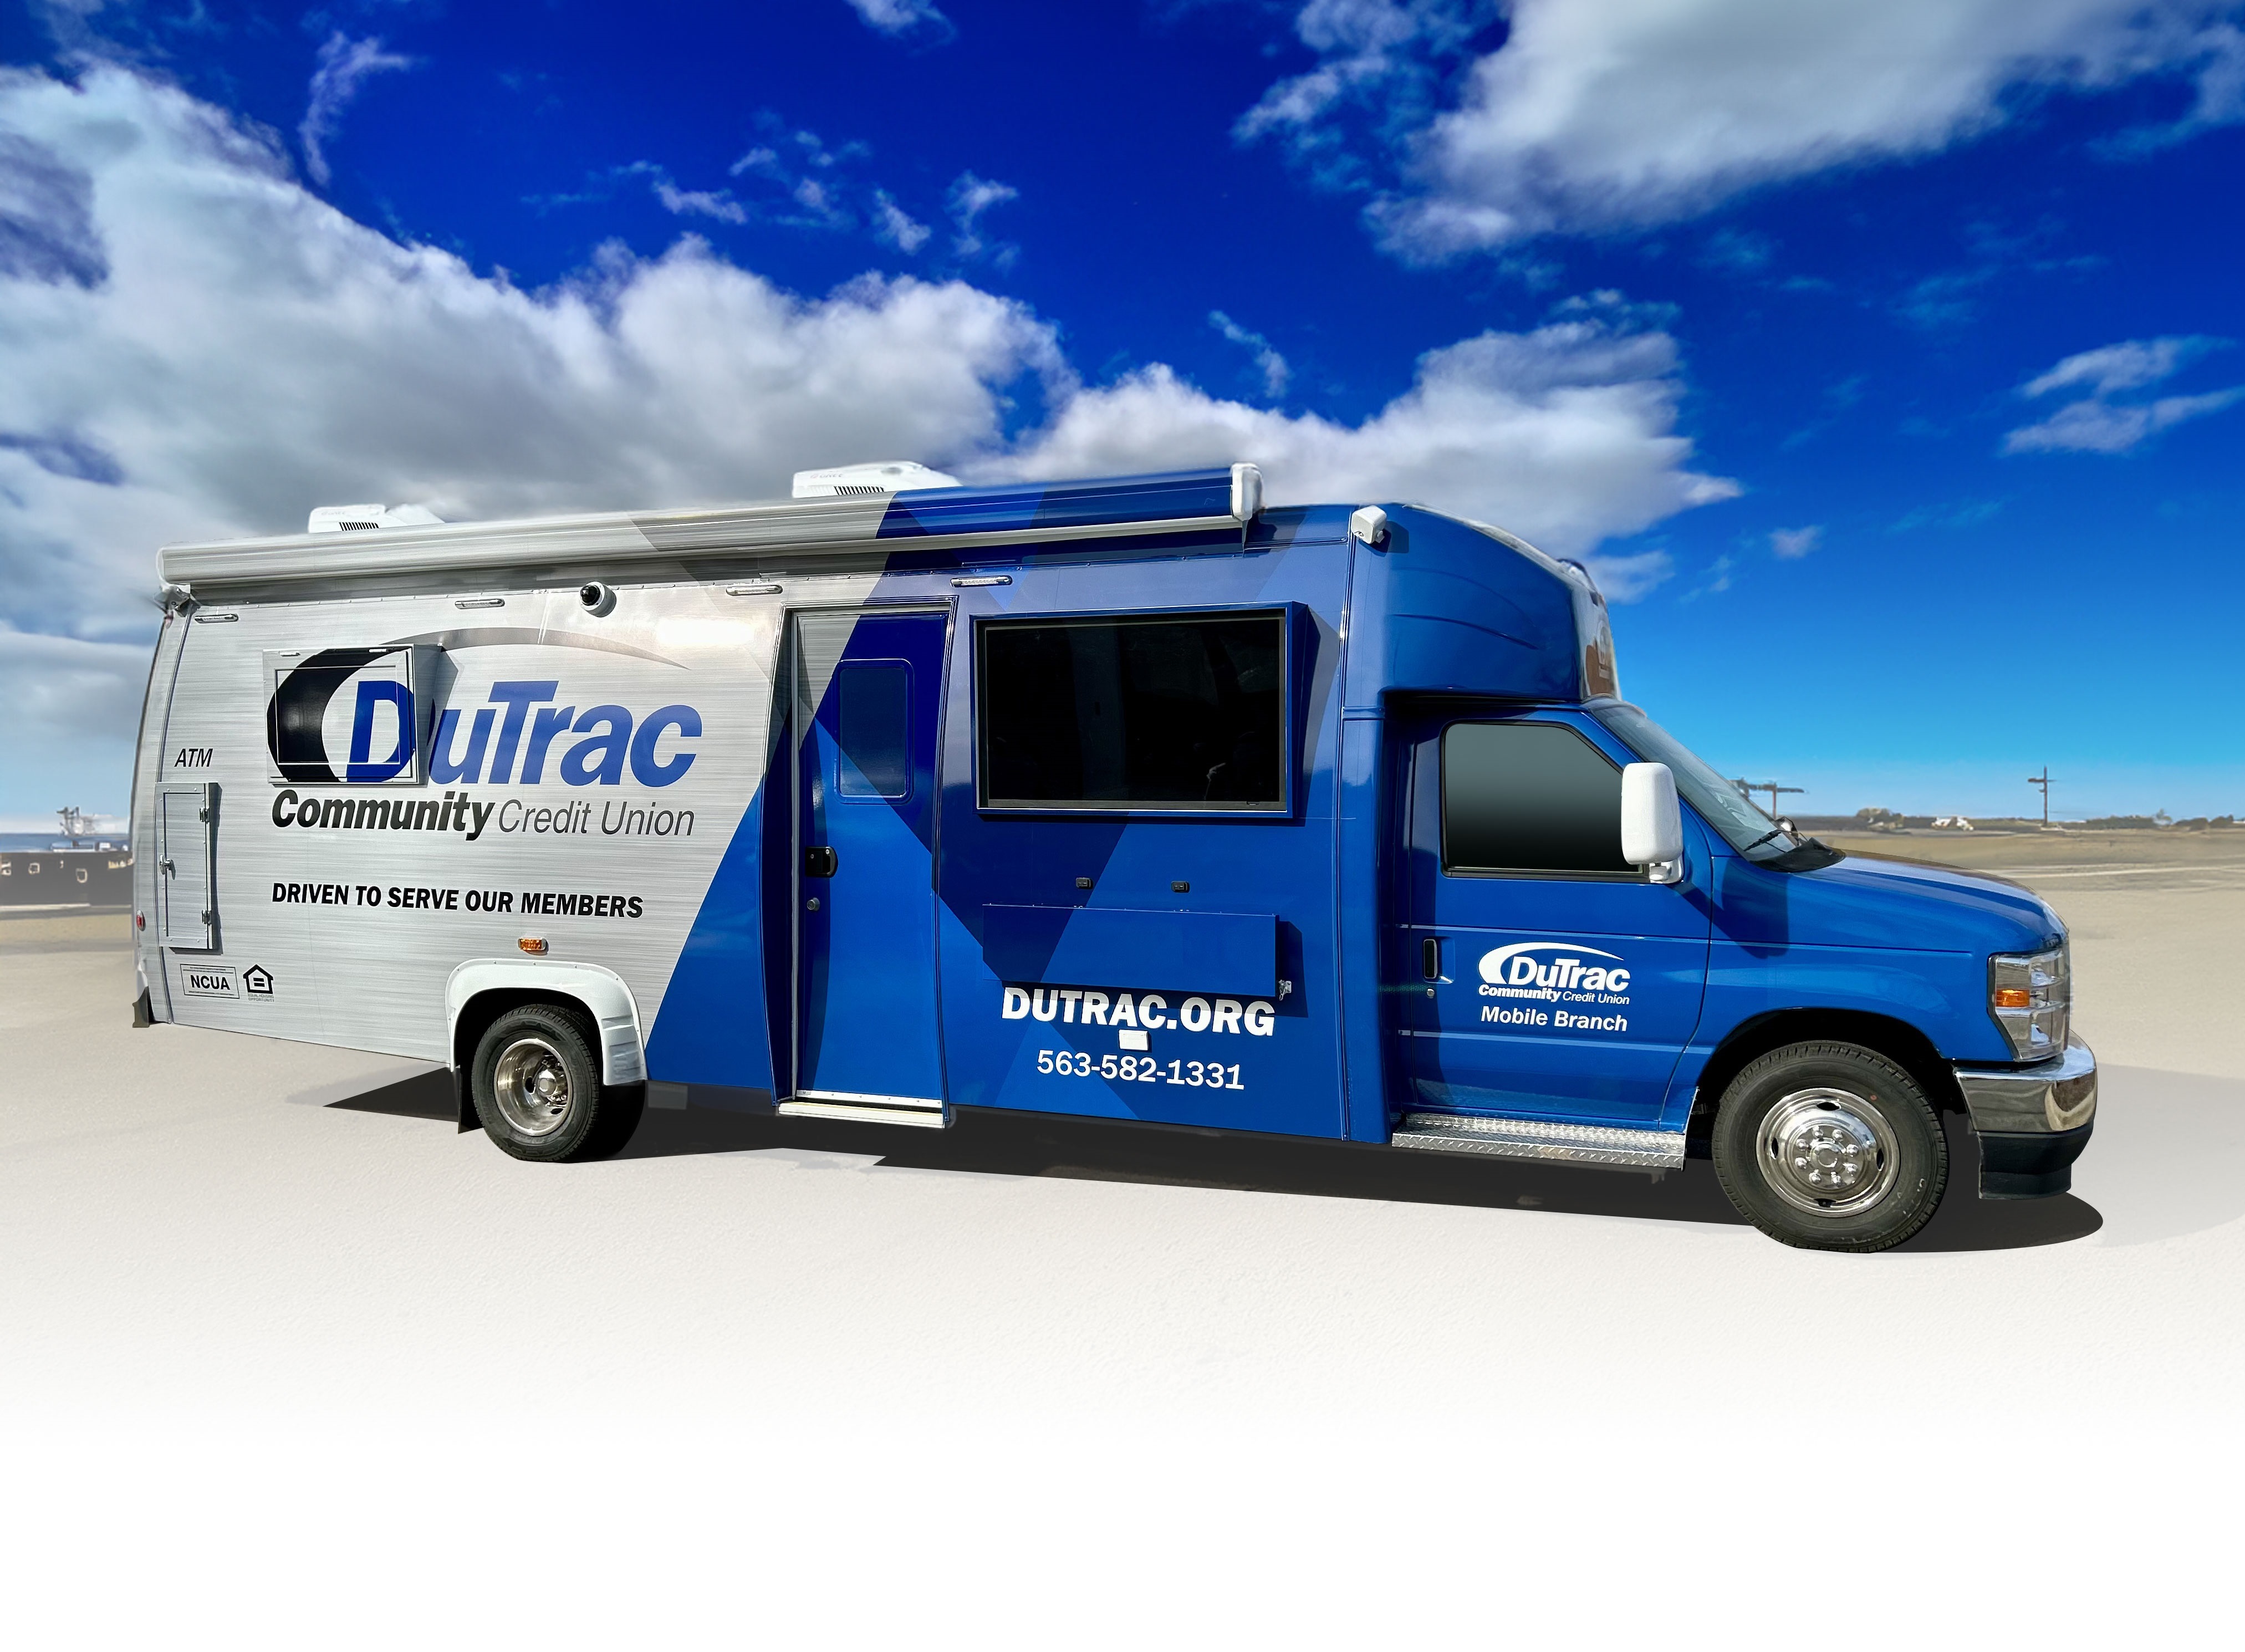 DuTrac Mobile Branch